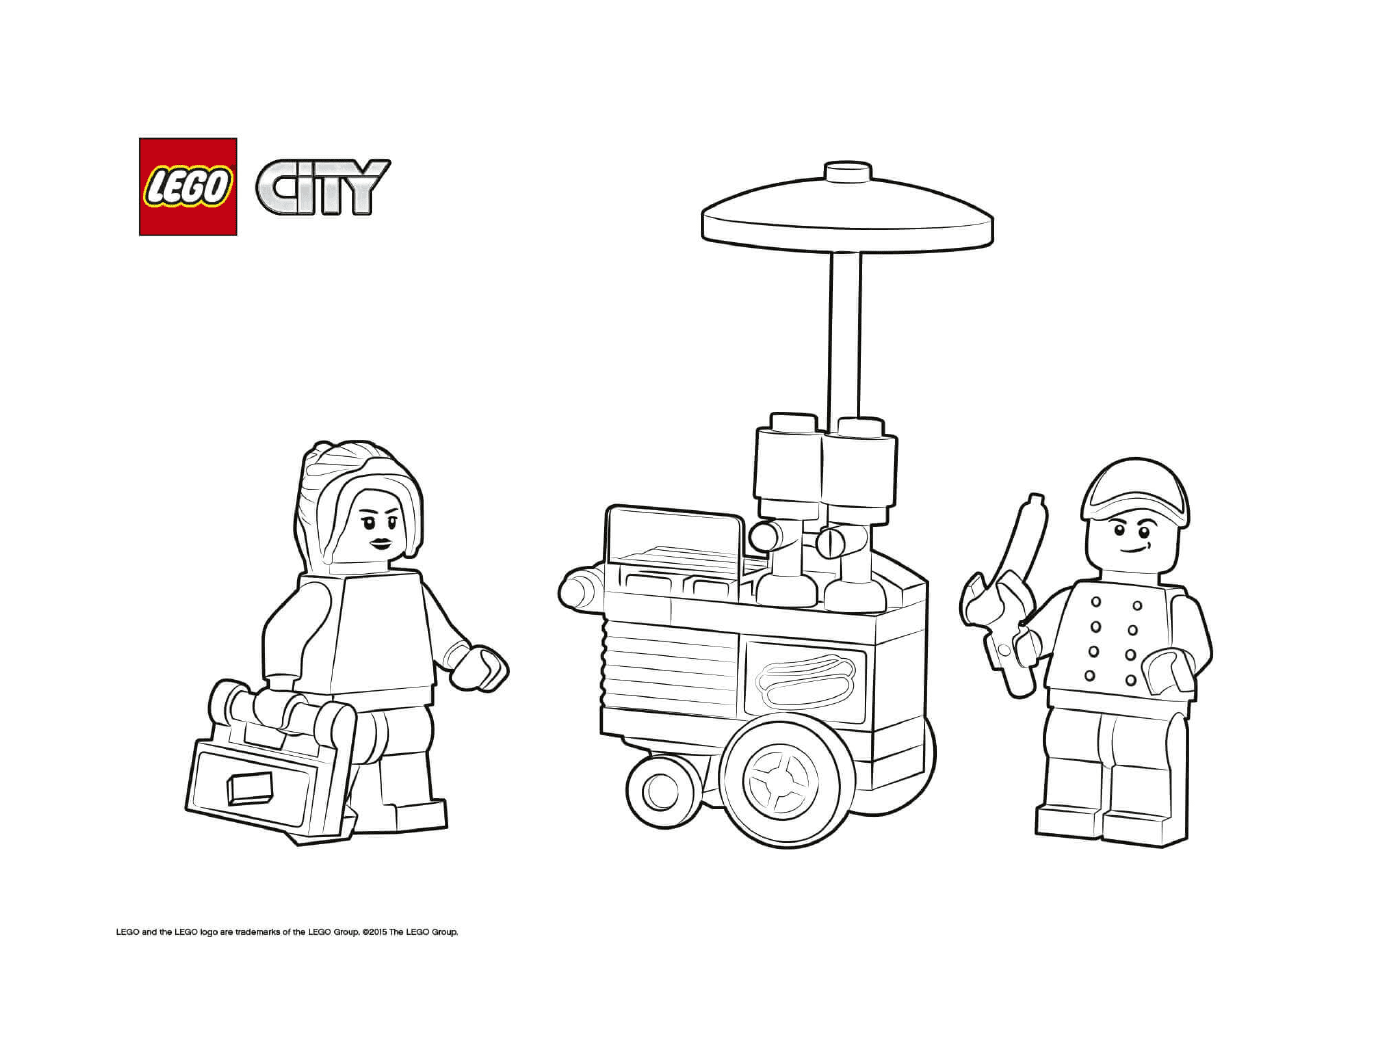  Lego City SquareCity name (optional, probably does not need a translation) 